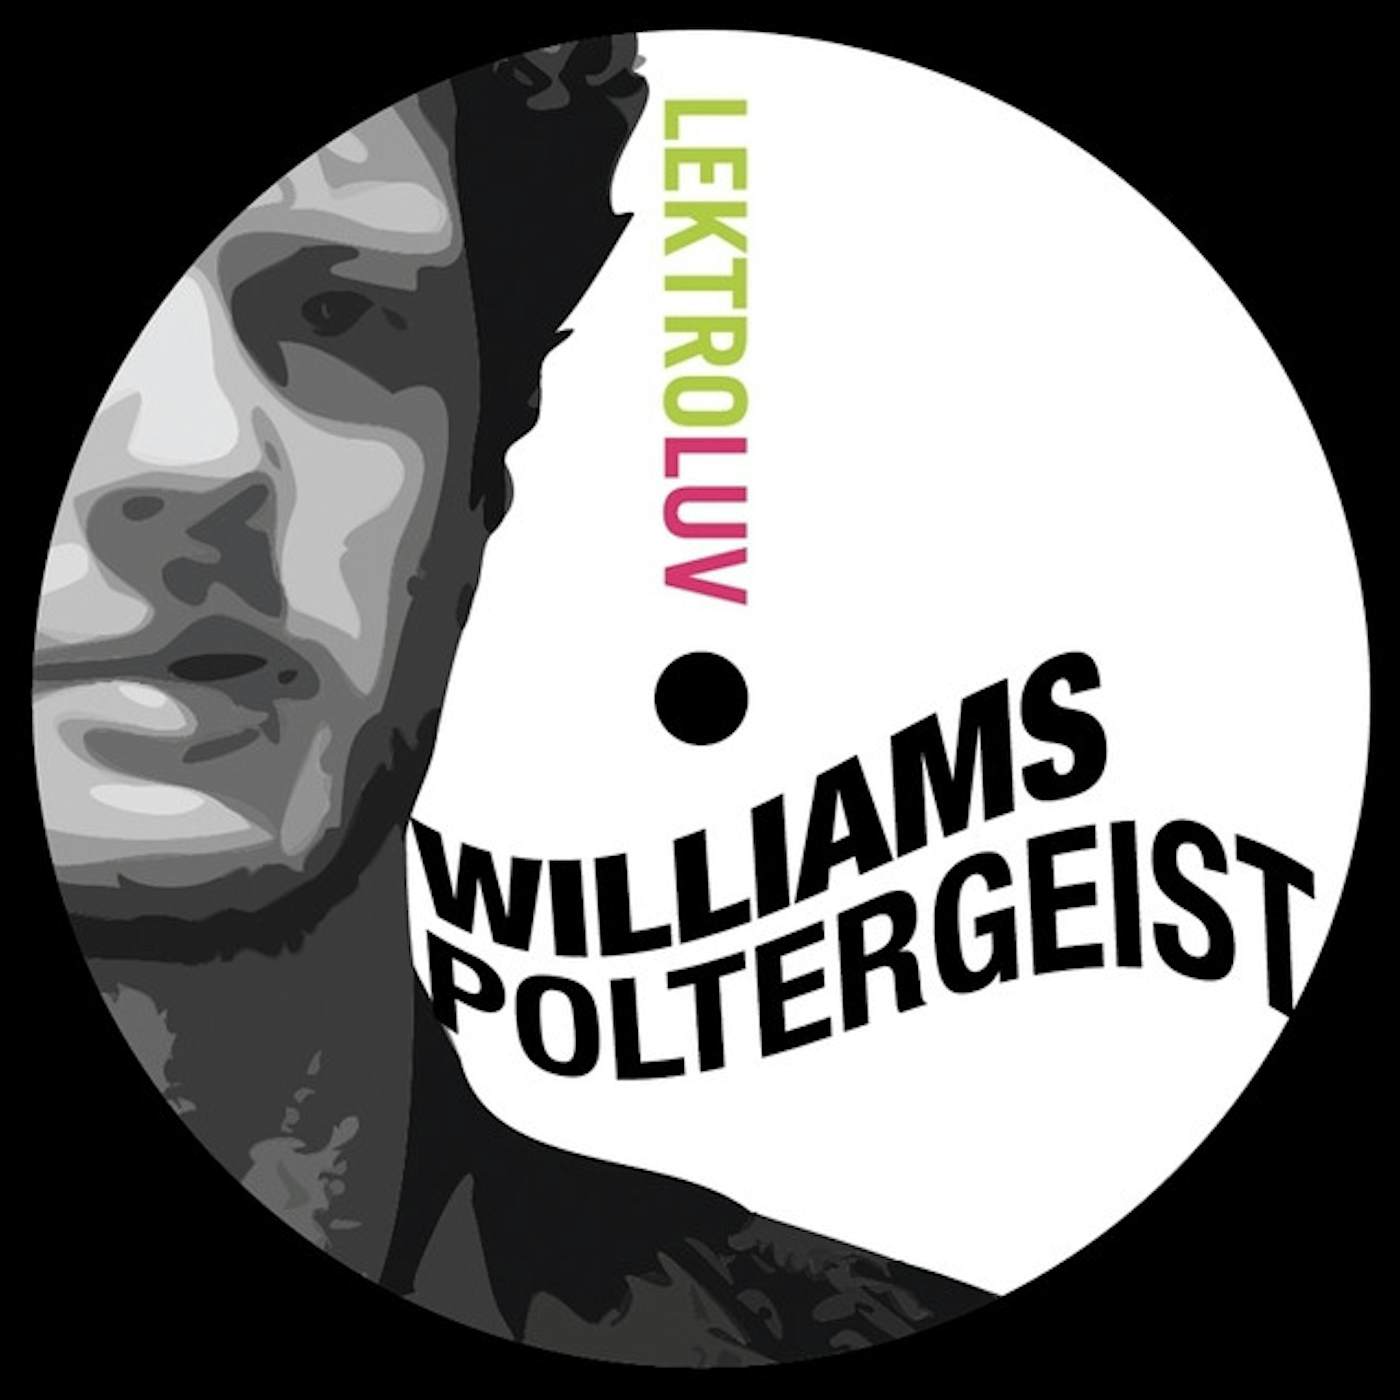 Williams Poltergeist Vinyl Record